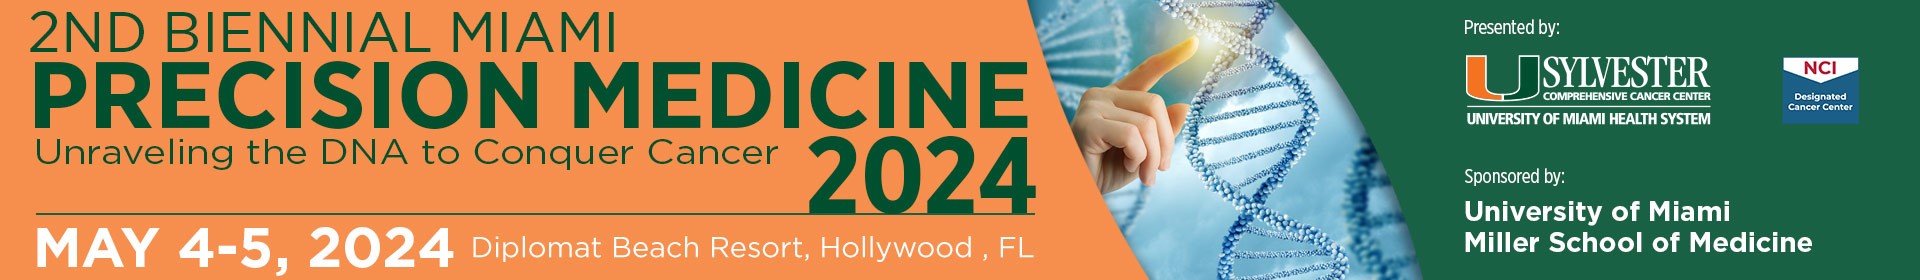 2nd Biennial Miami Precision Medicine 2024 Banner